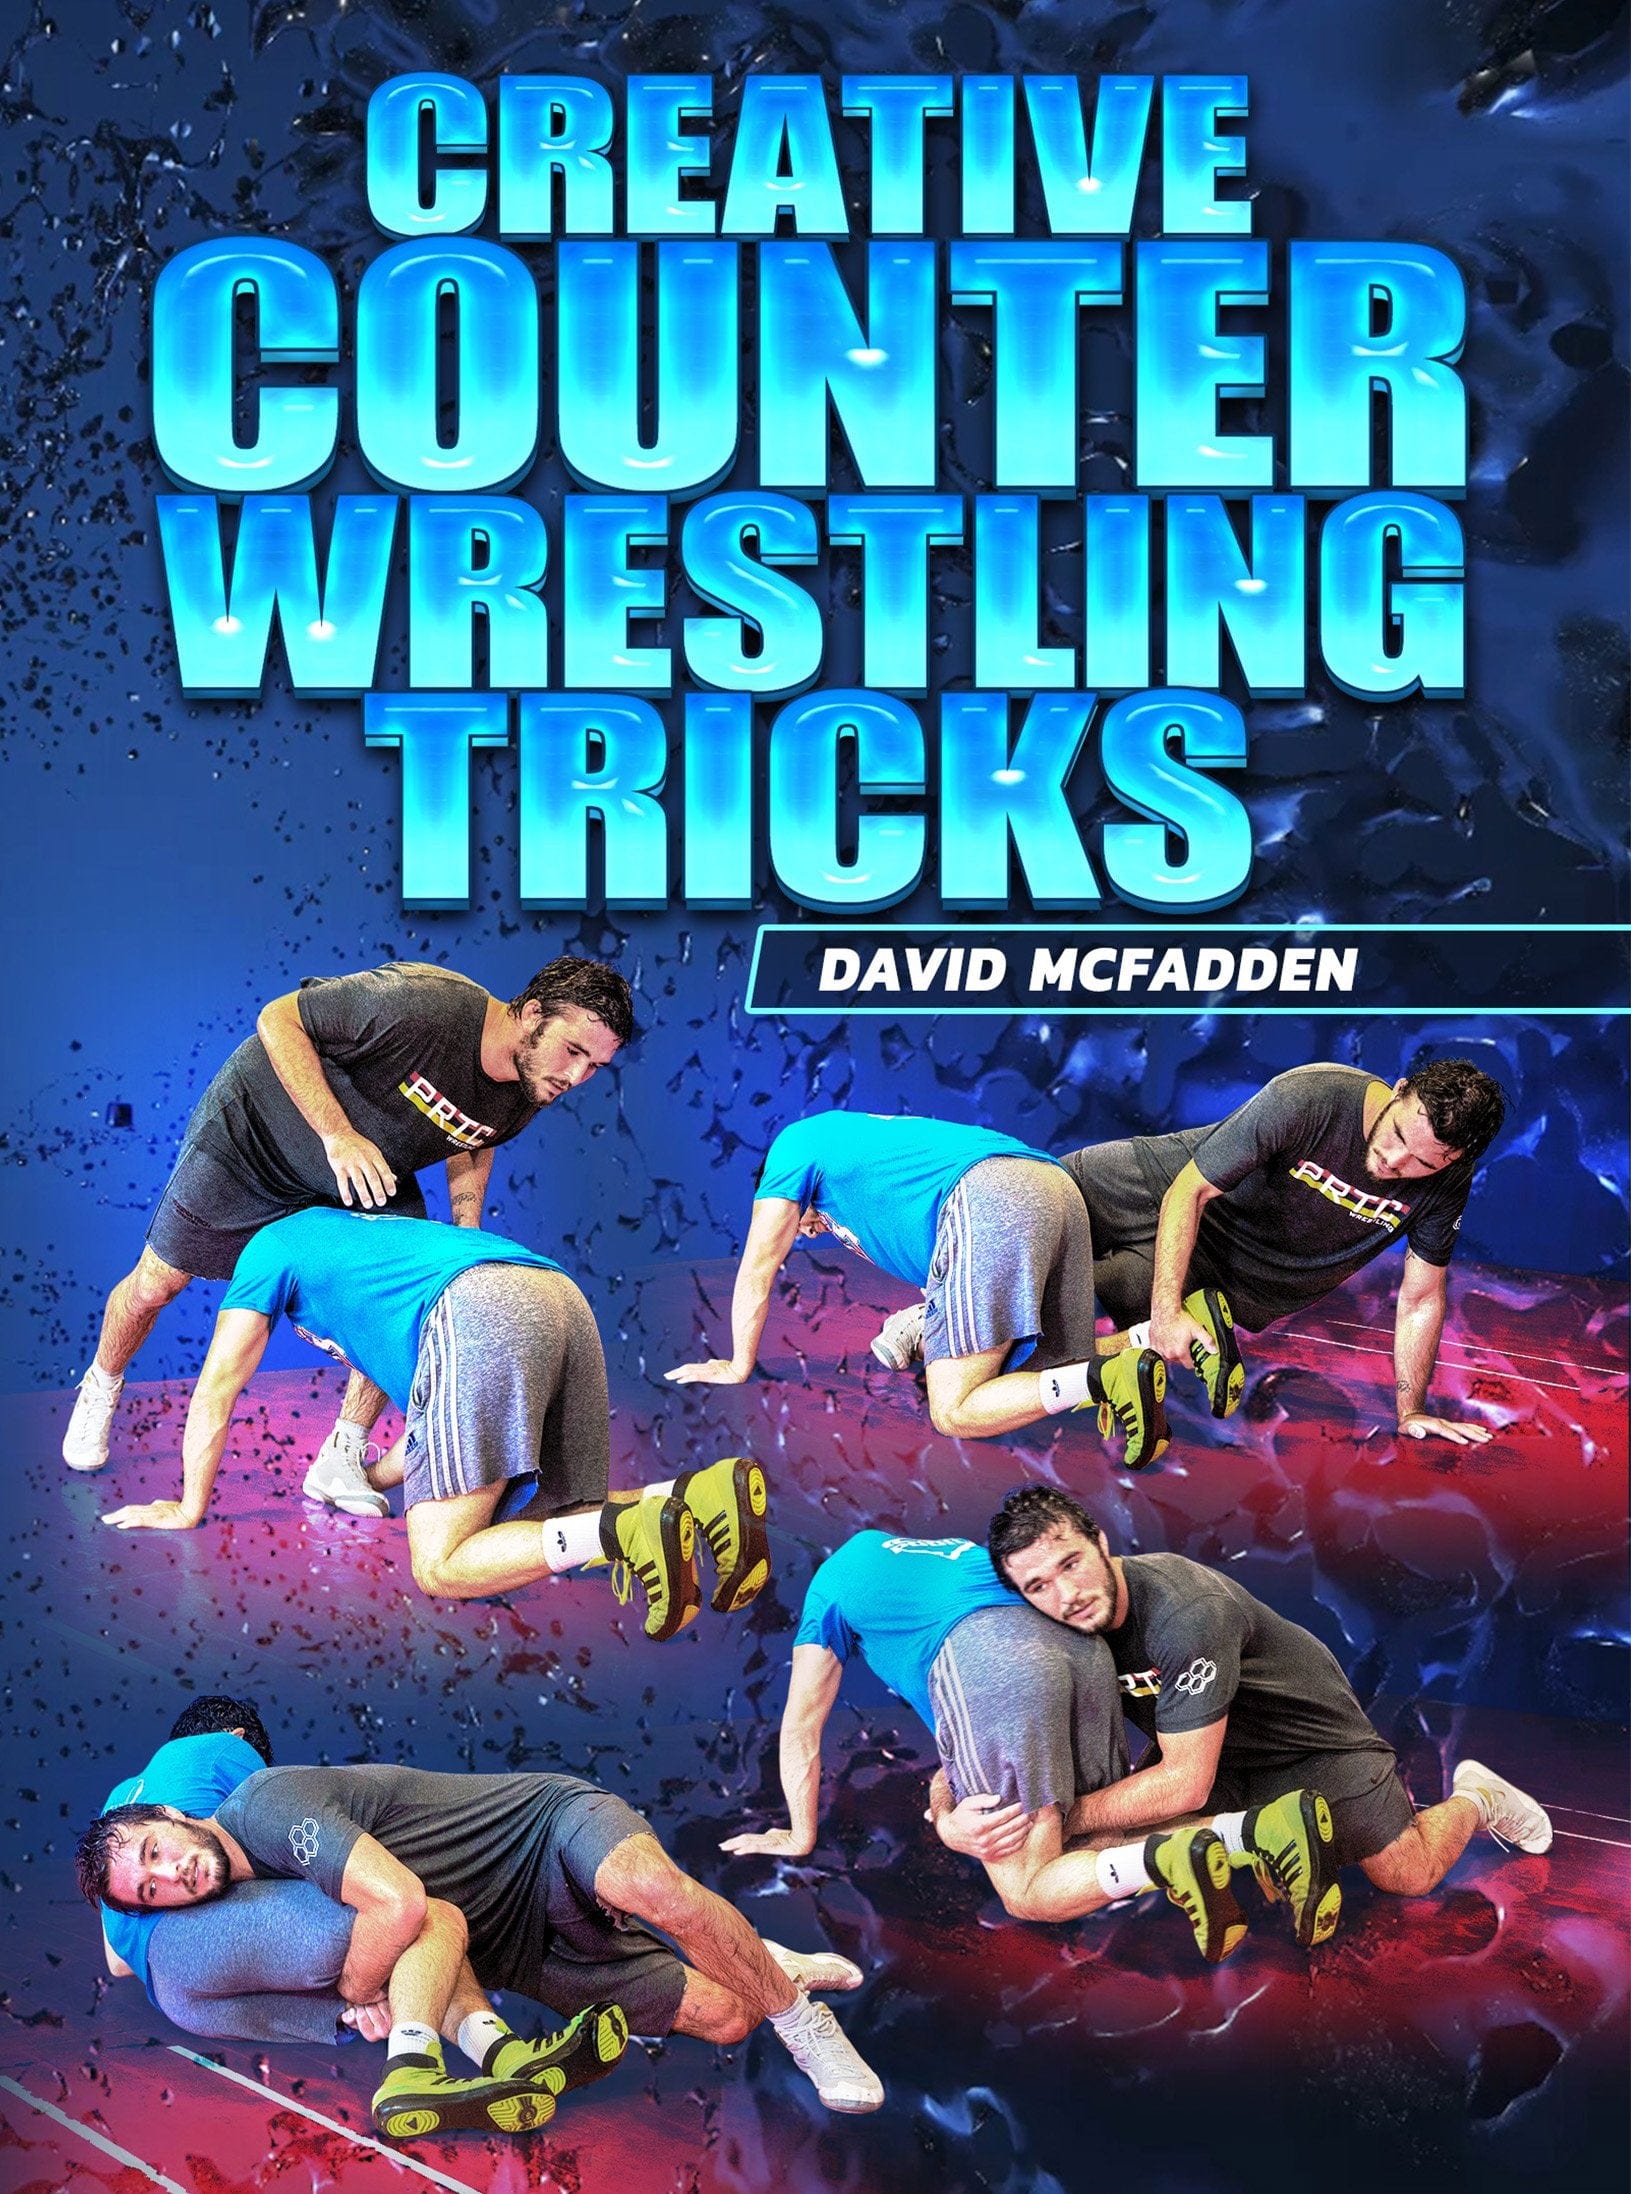 Creative Counter Wrestling Tricks by David McFadden - Fanatic Wrestling